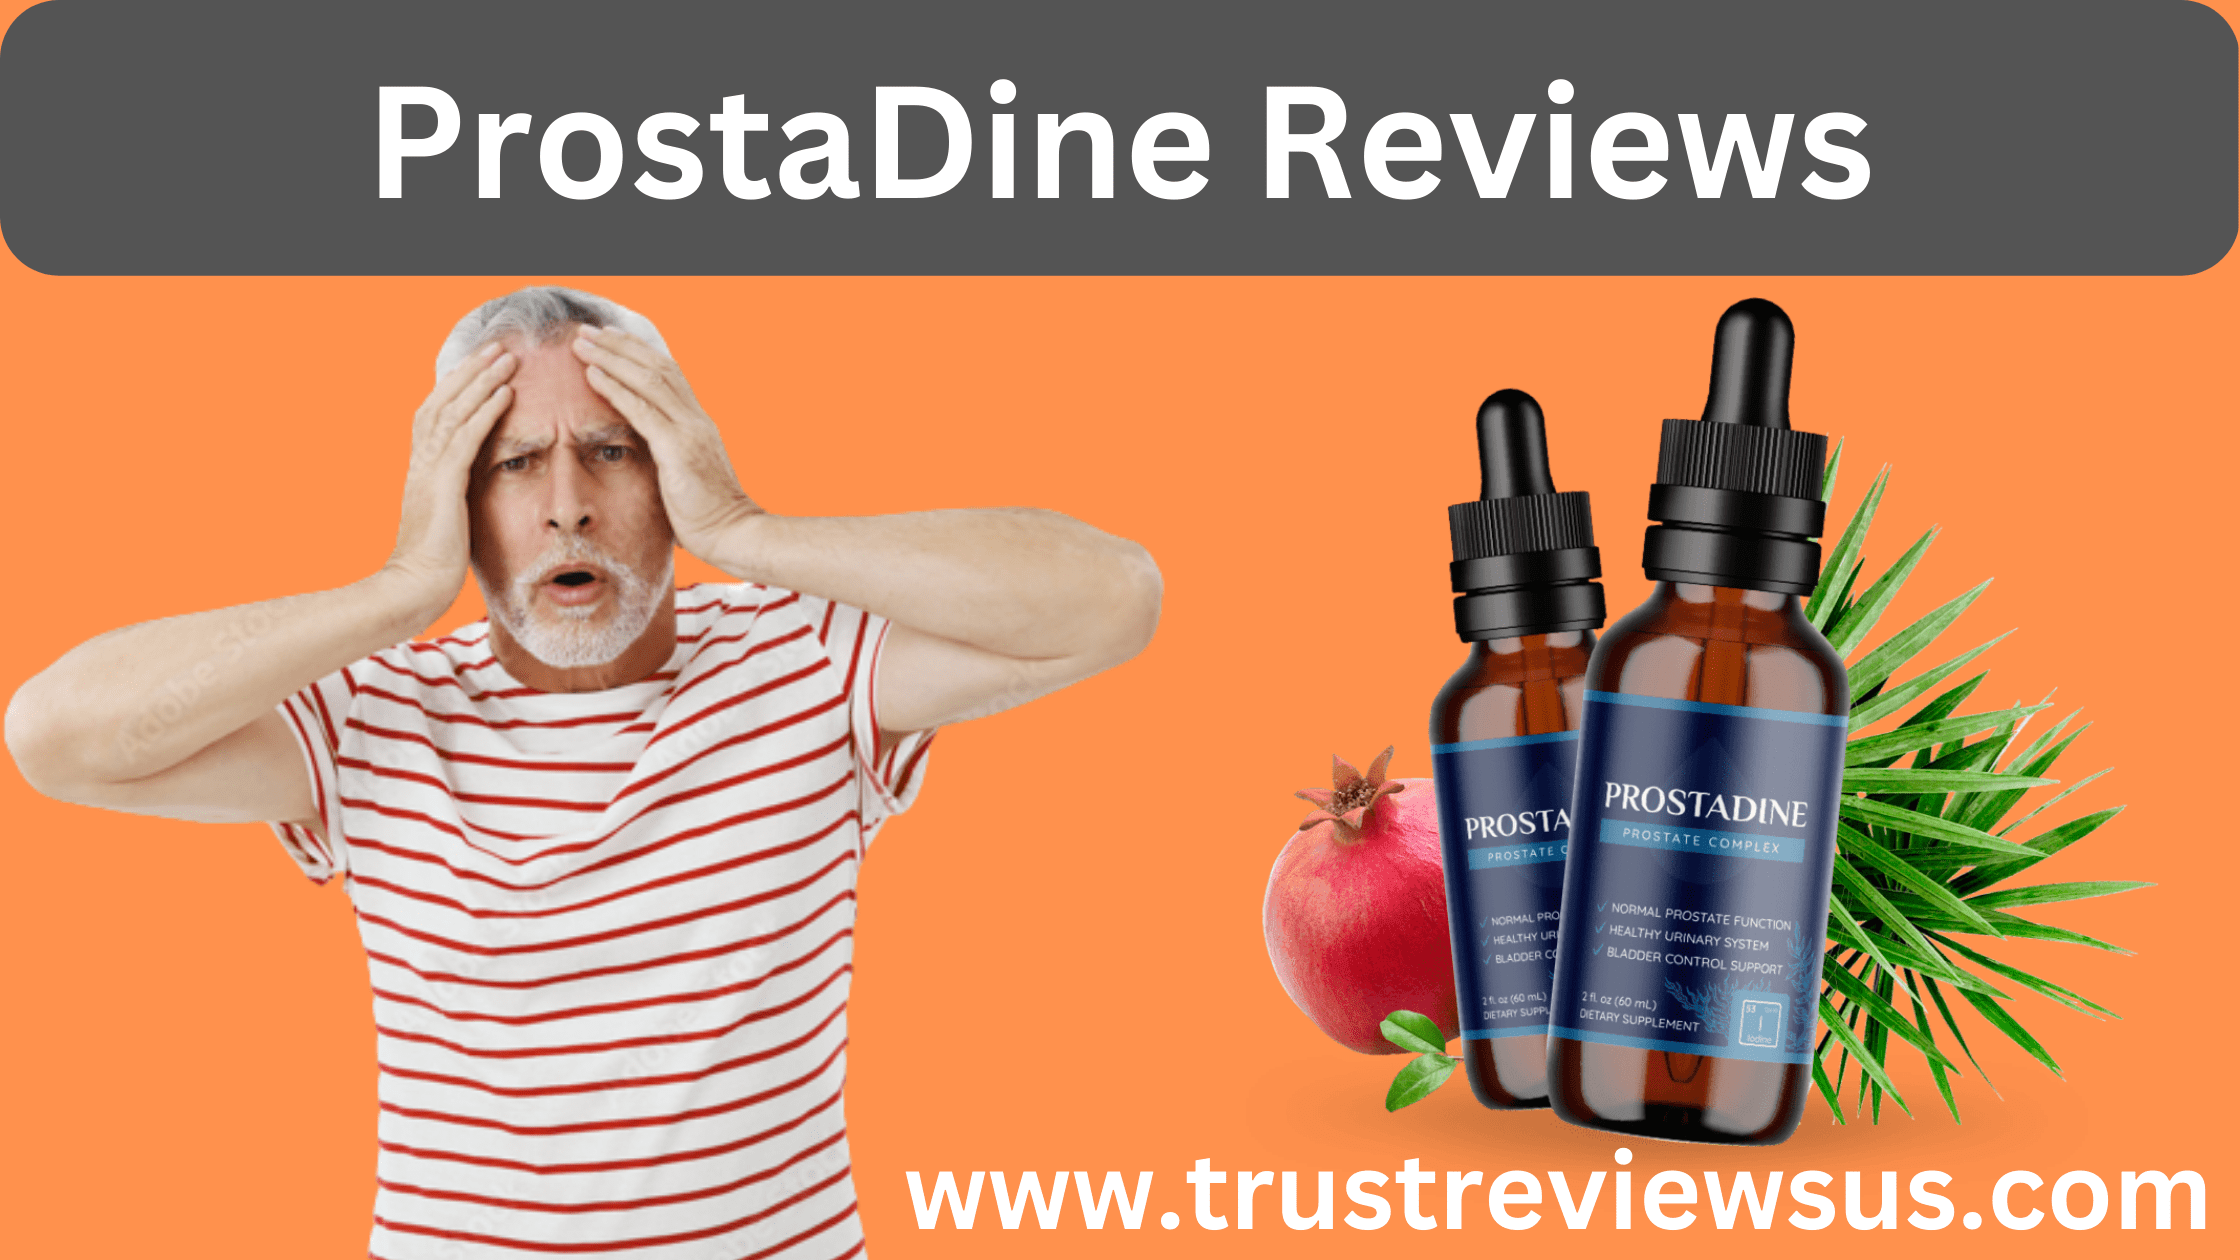 Prostadine Reviews